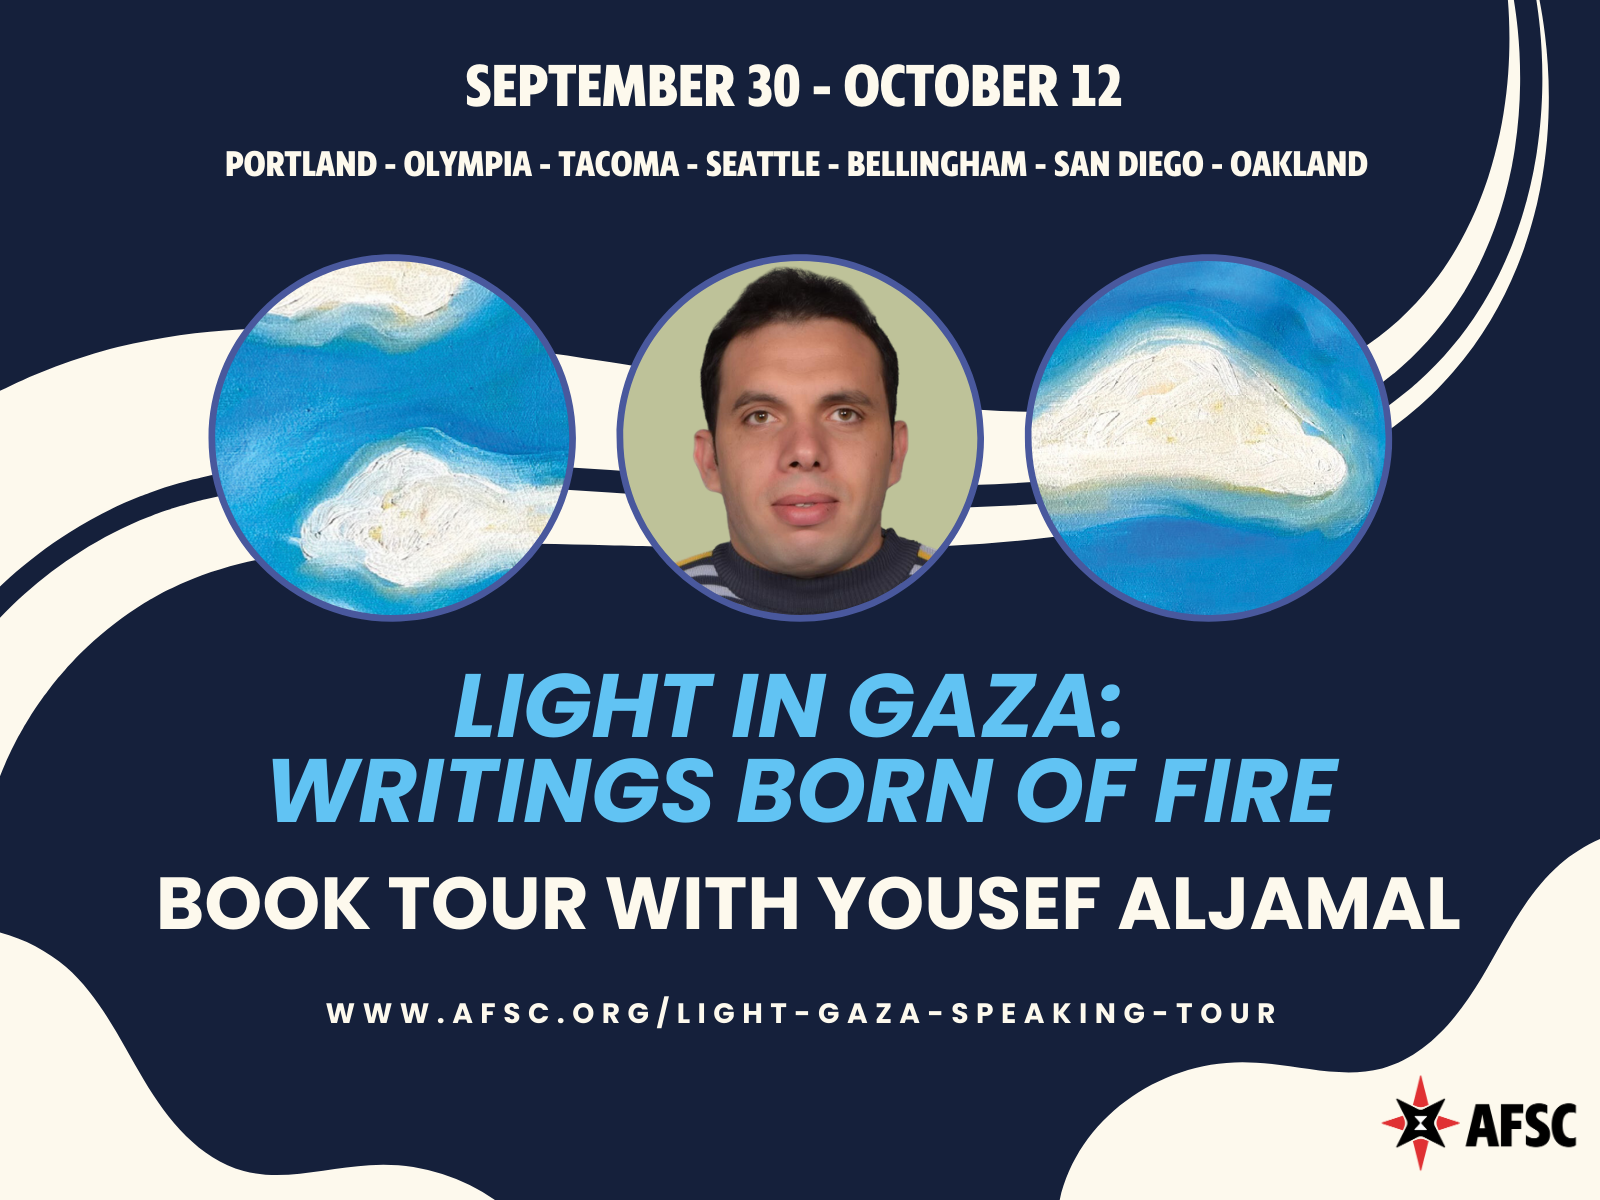 Light in Gaza Speaking tour